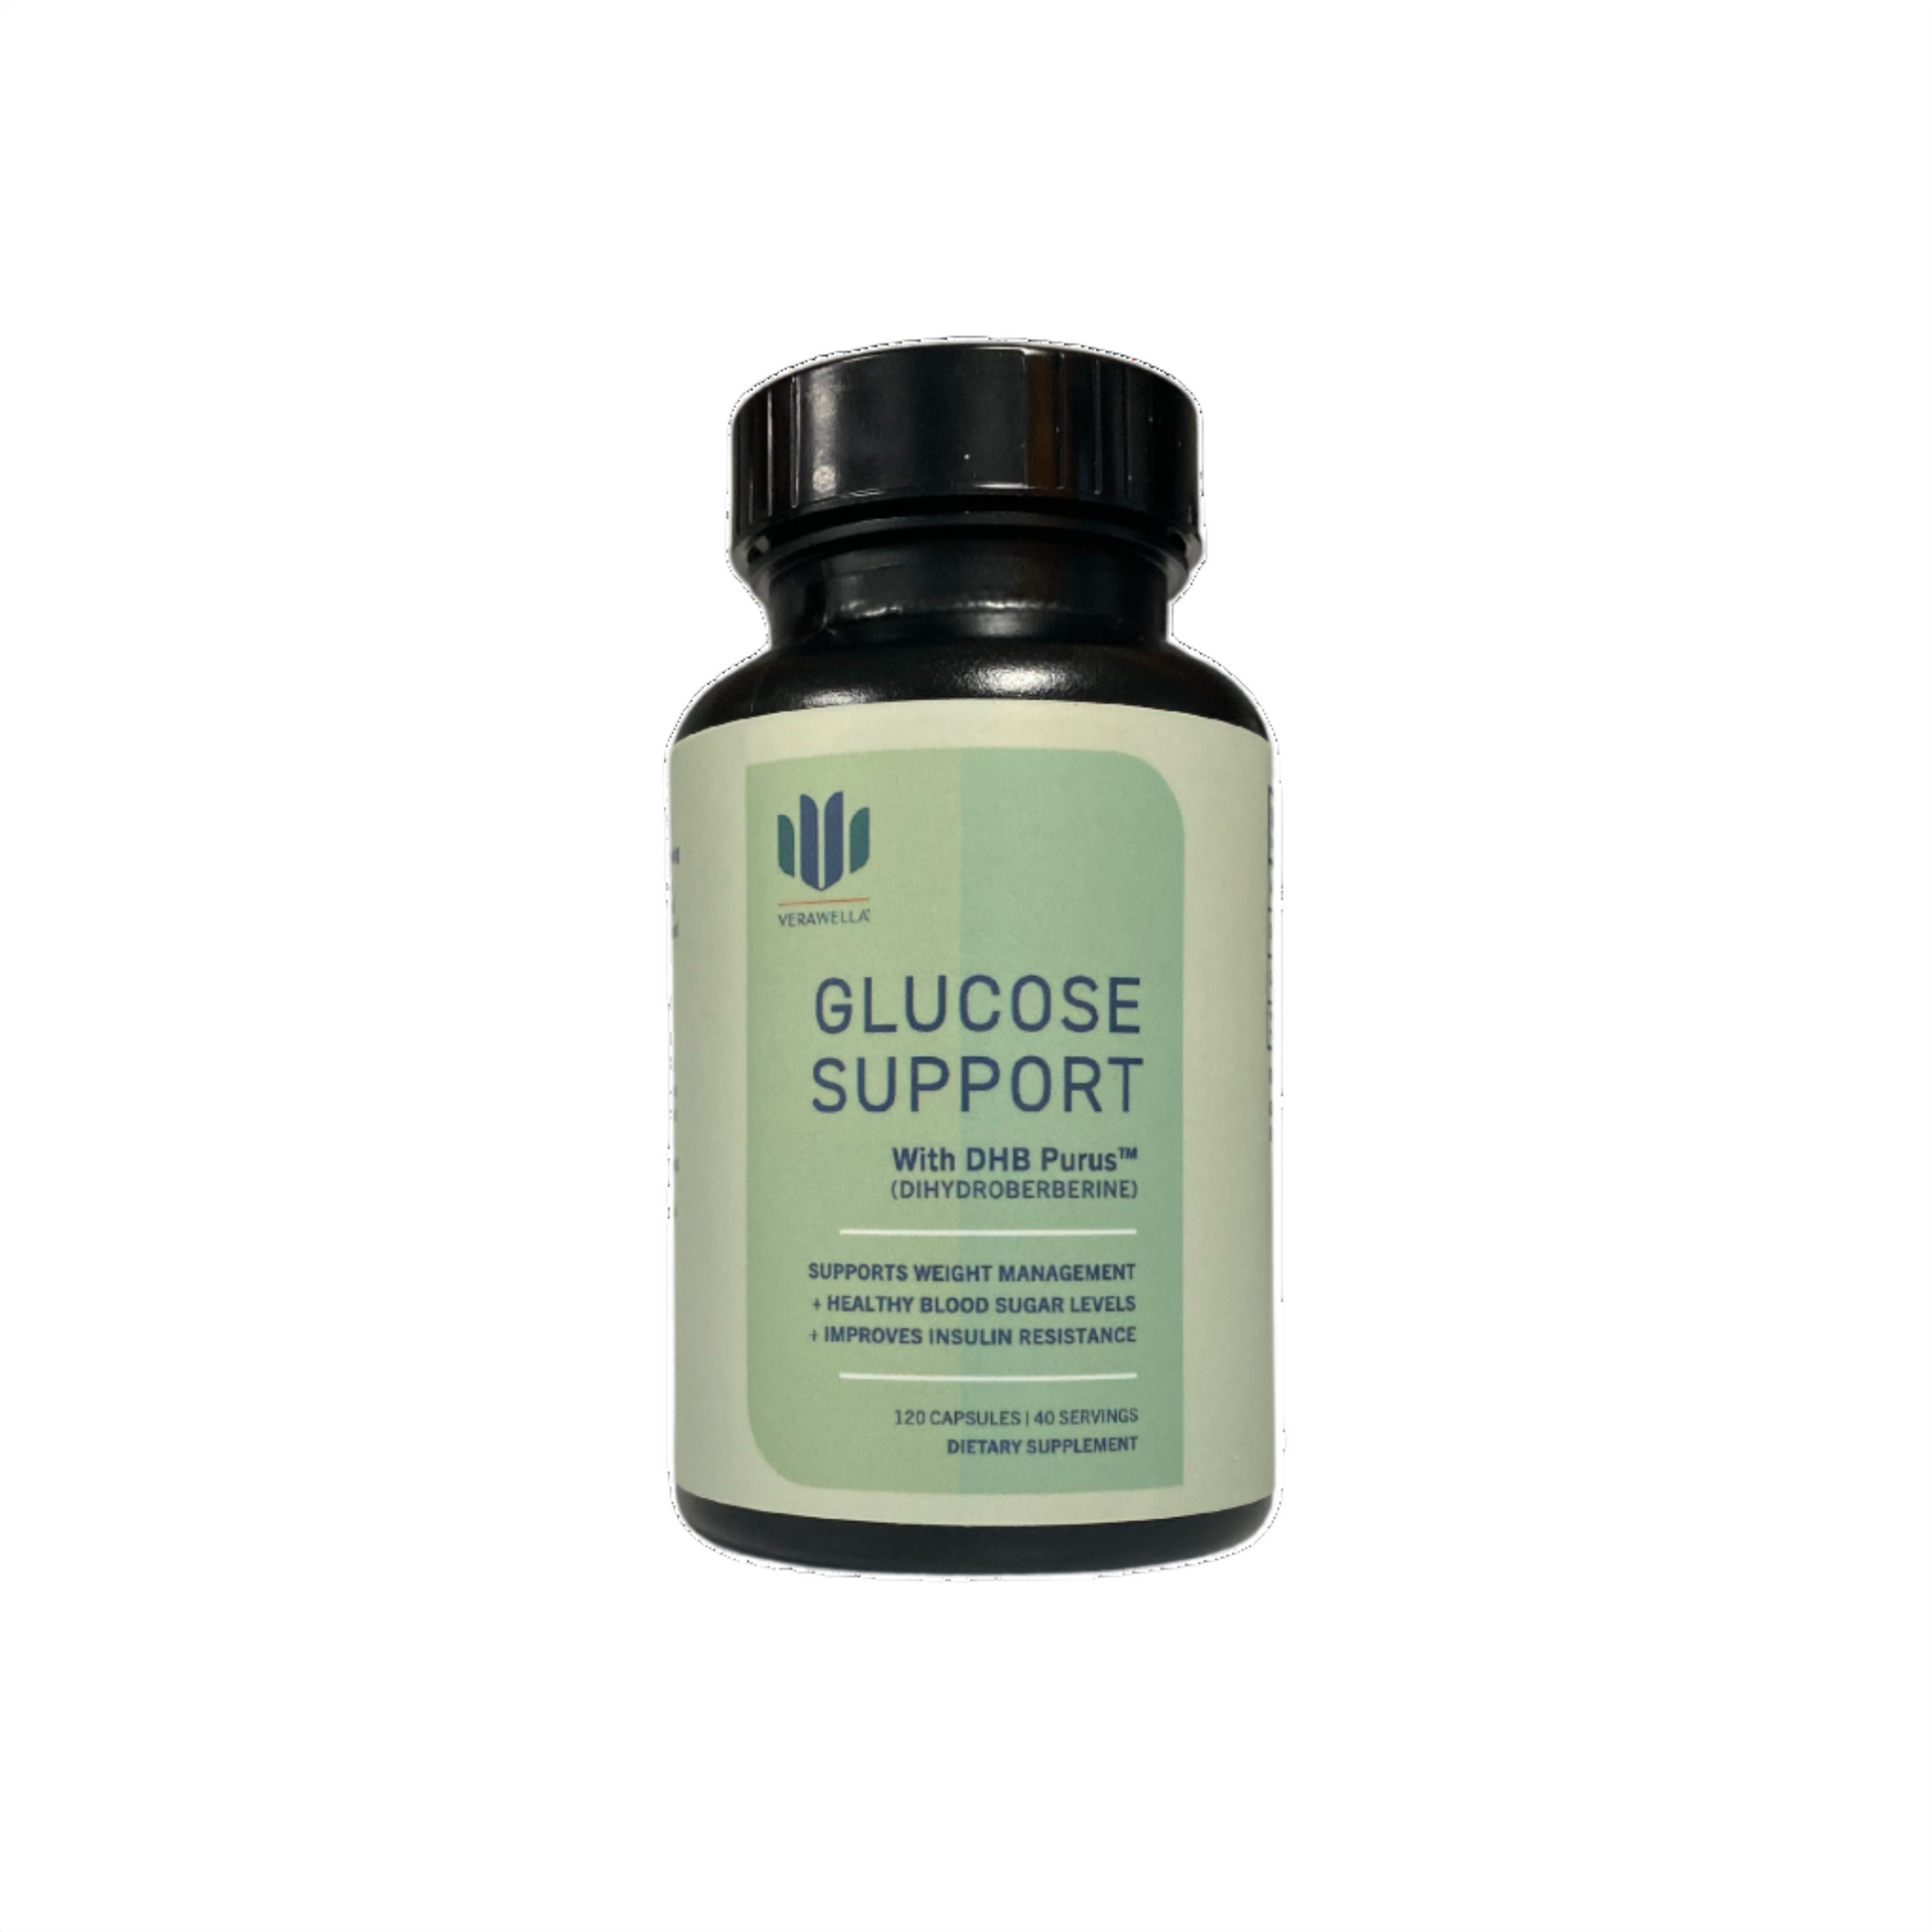 Glucose Support bottle for weight loss, prediabetes, blood sugar, insulin resistance, insulin sensitivity, keto, energy, cravings, diyhydroberberine.